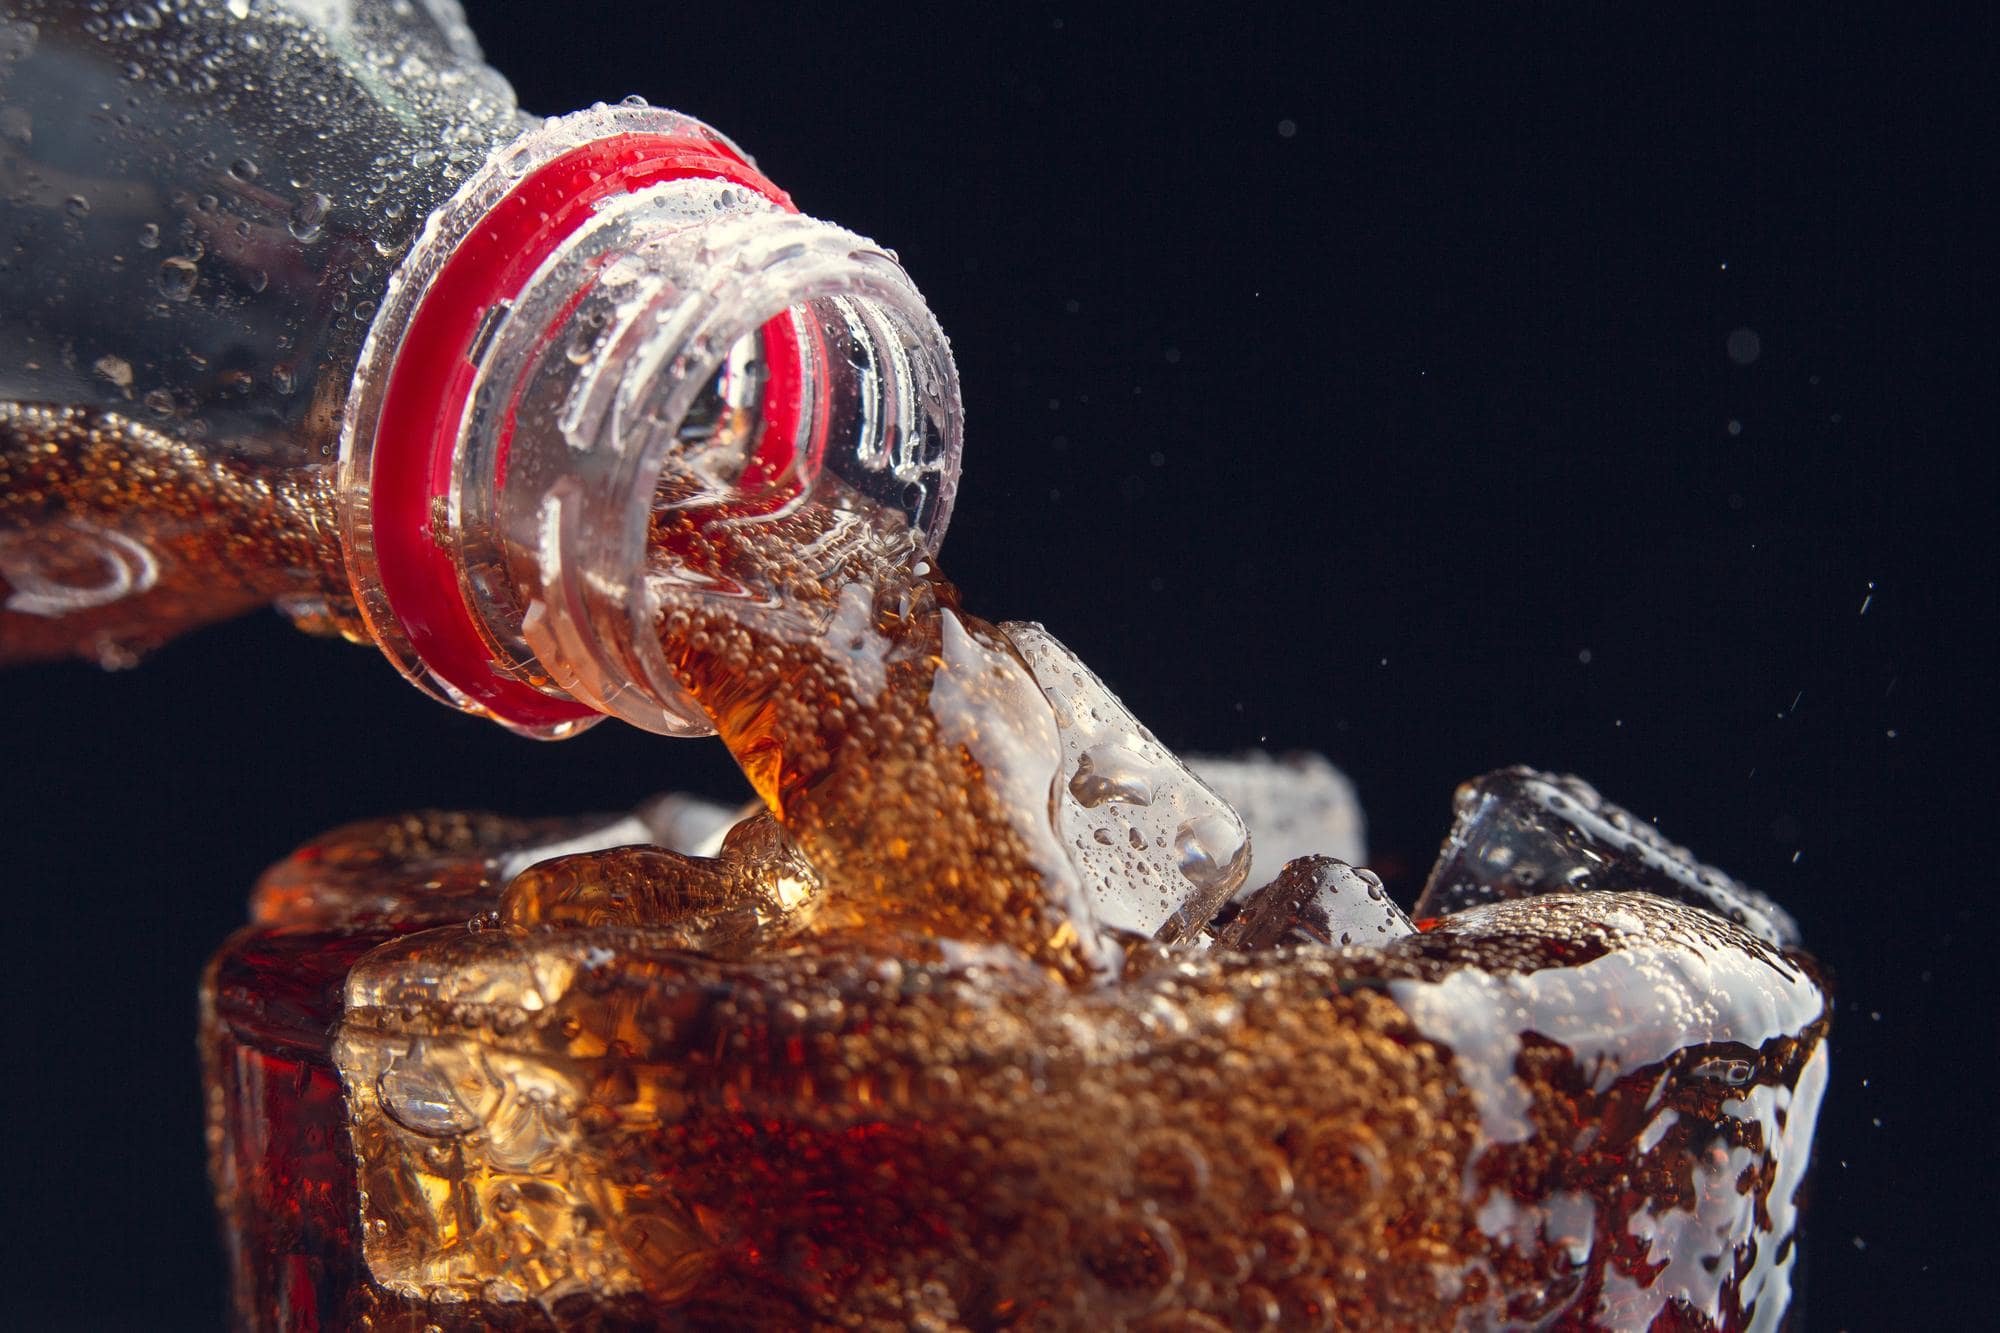 Soda-licious Surprises: 29 Gift Ideas for Coca Cola Lovers